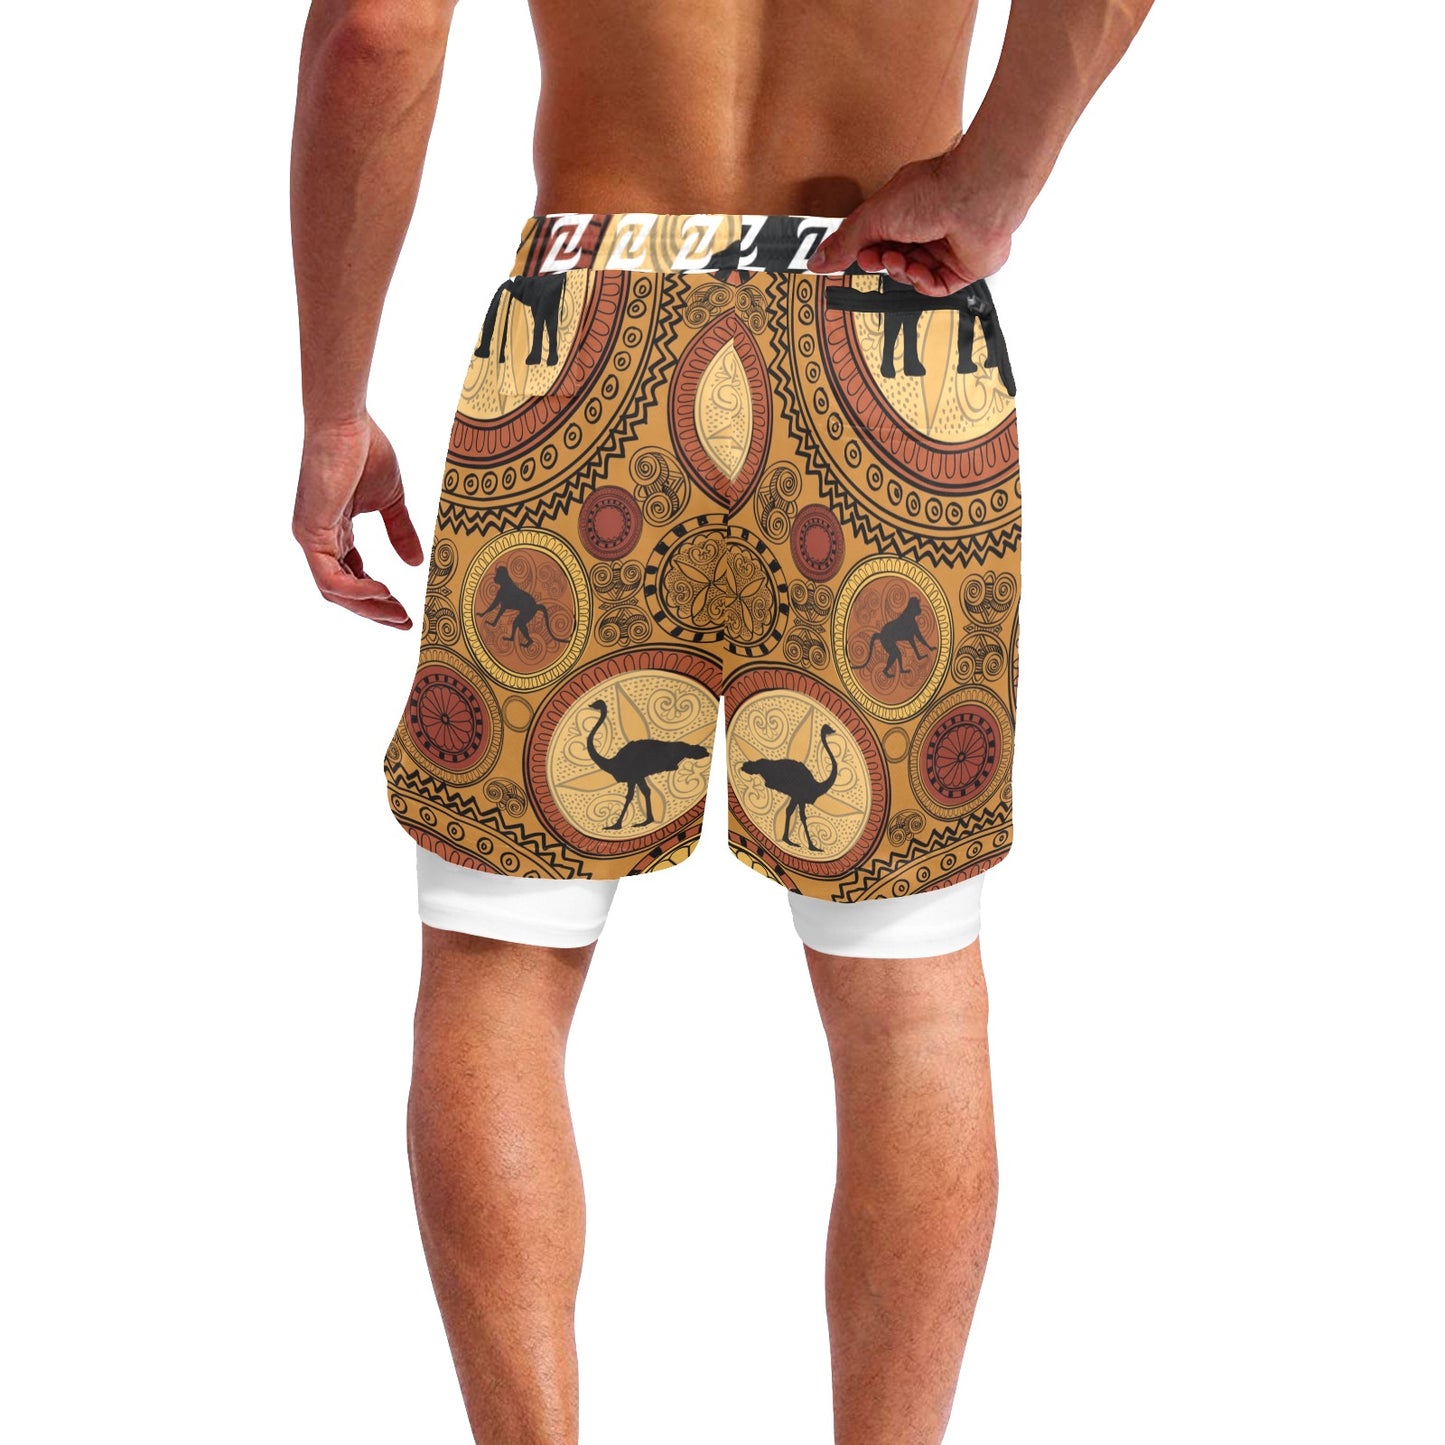 Zen Shorts with Liner - Amazon